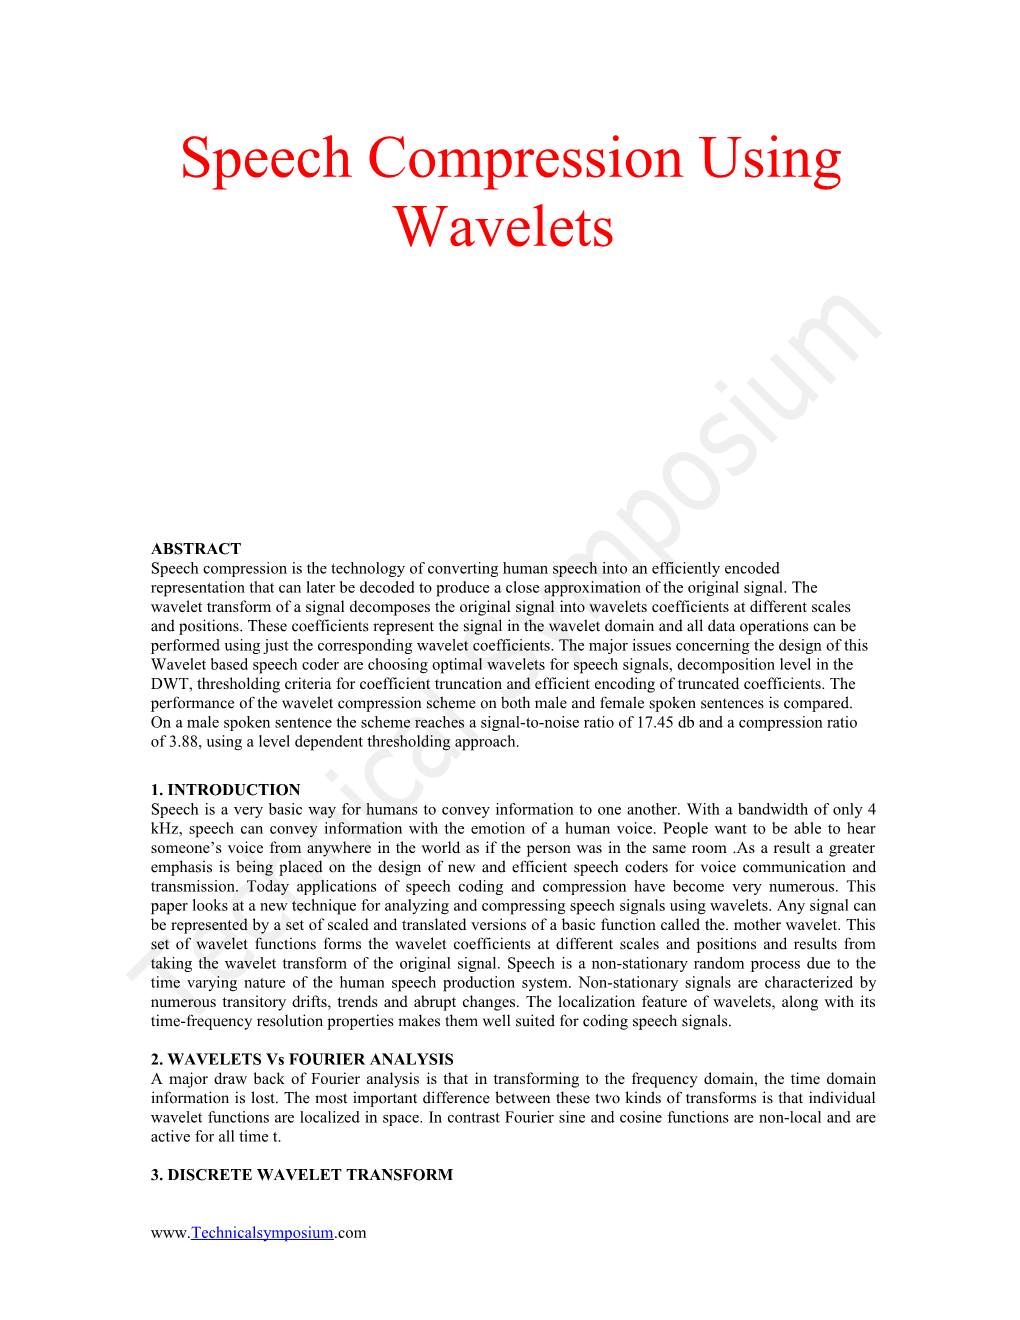 Speech Compression Using Wavelets